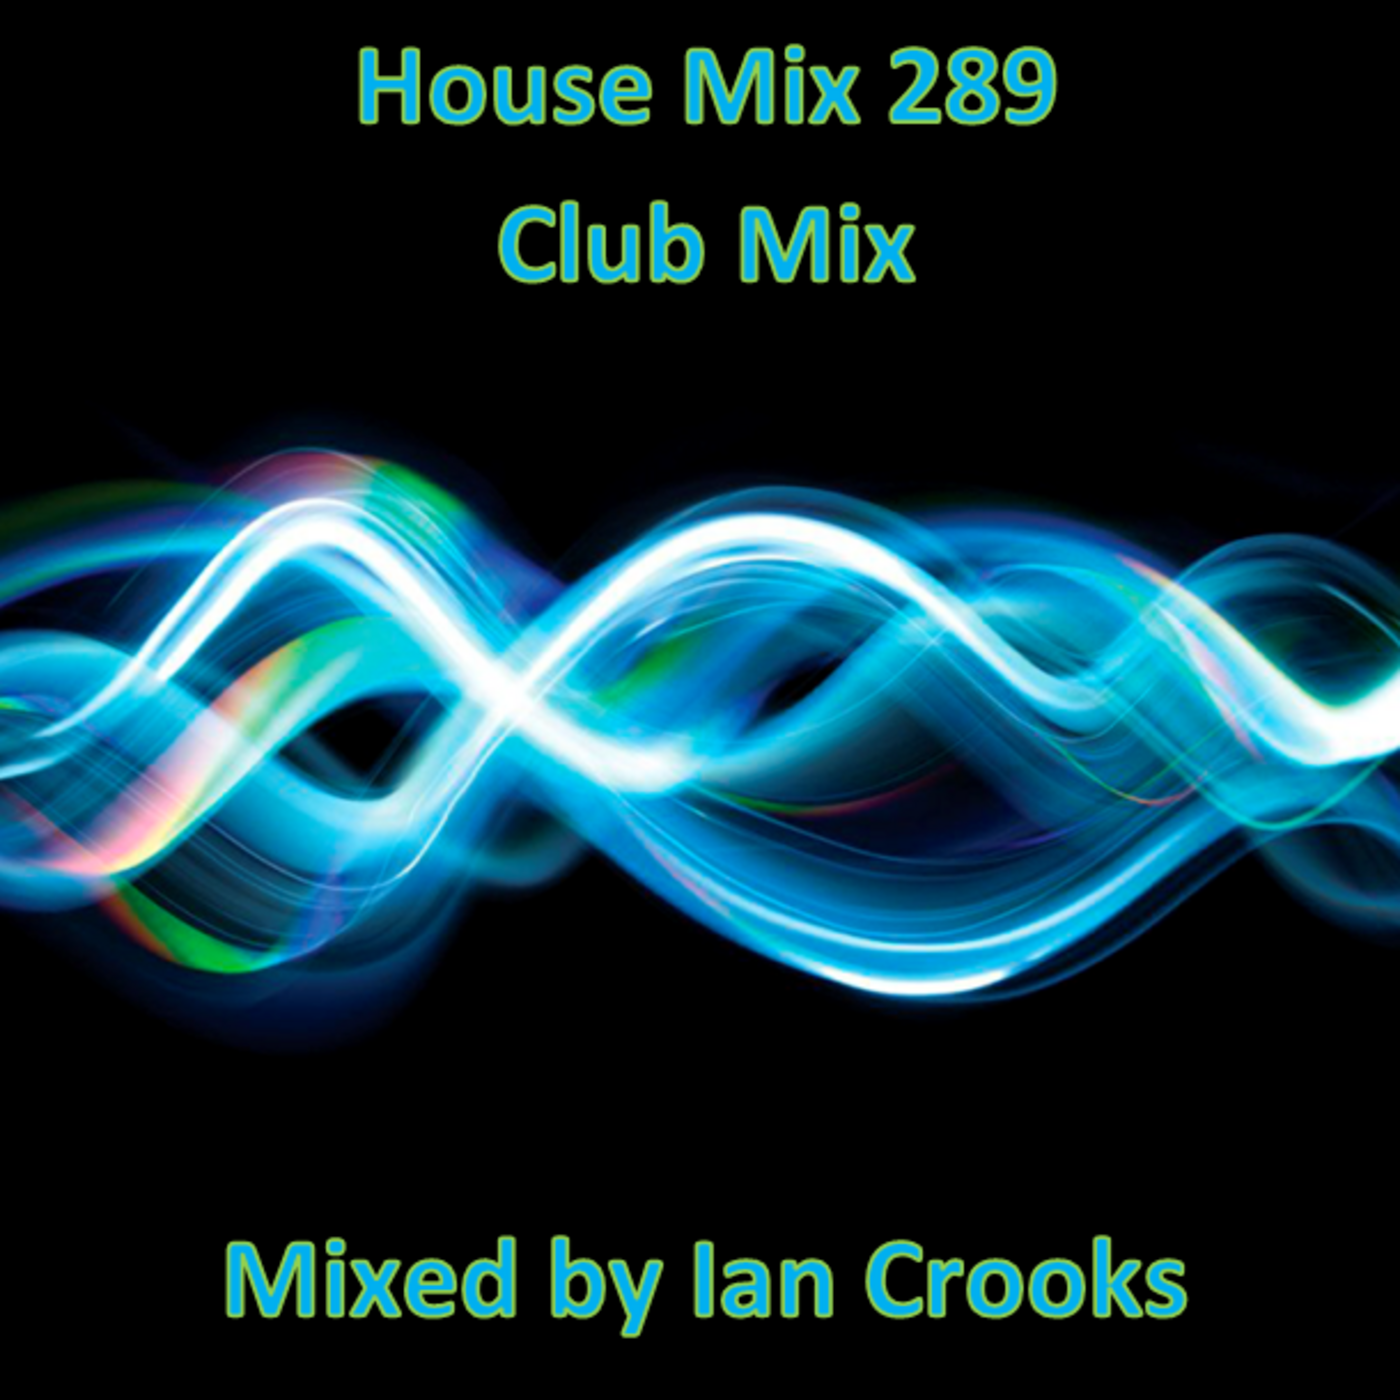 Episode 289: Ian Crooks Mix 289 (Club Mix)